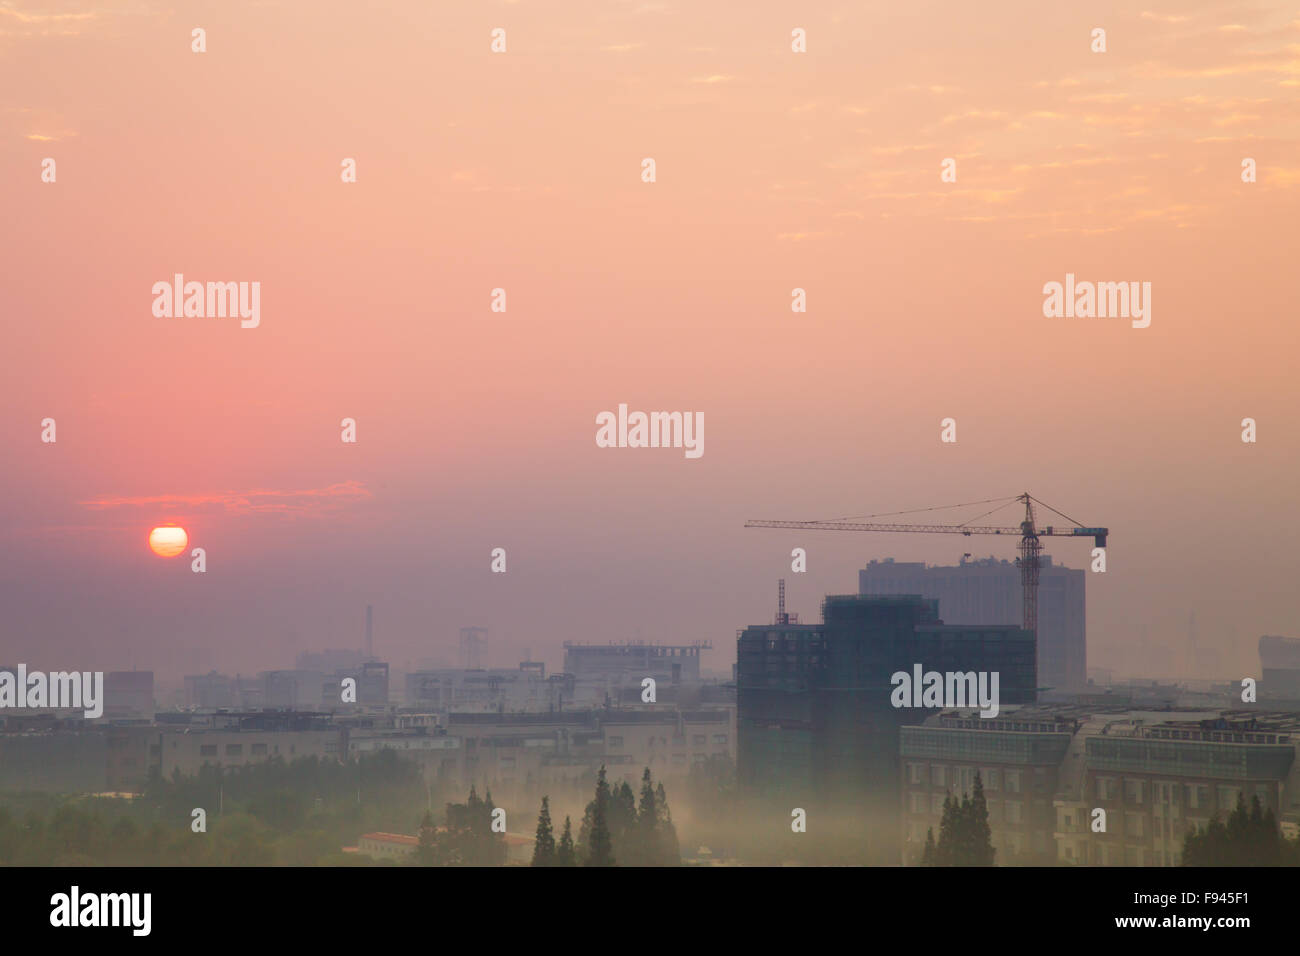 Sunrise in Shanghai on hazy day with smog Stock Photo